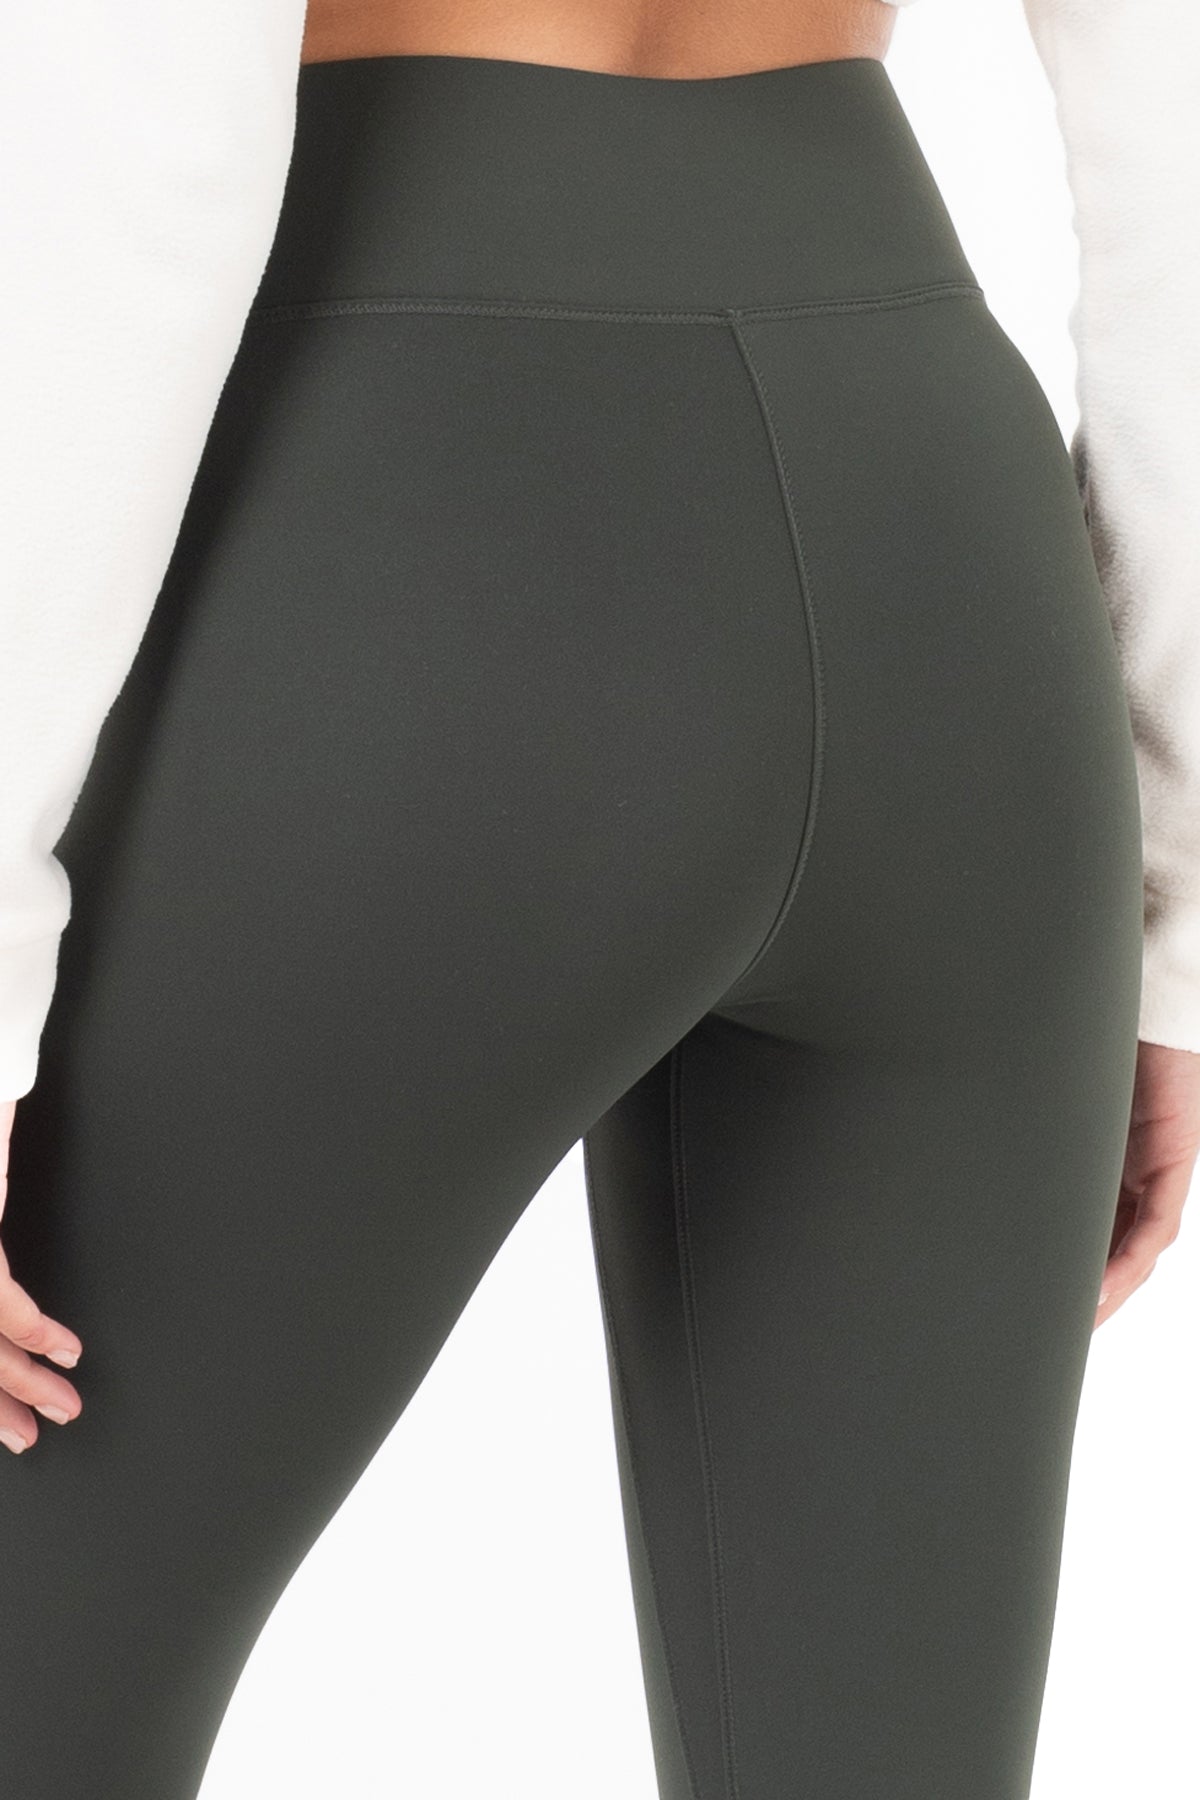 nsendm Female Pants Adult Control Top Leggings High Waist for Women Pack  Women Print High Waist Pants for Womens Comfortable Work Pants(Black, L)